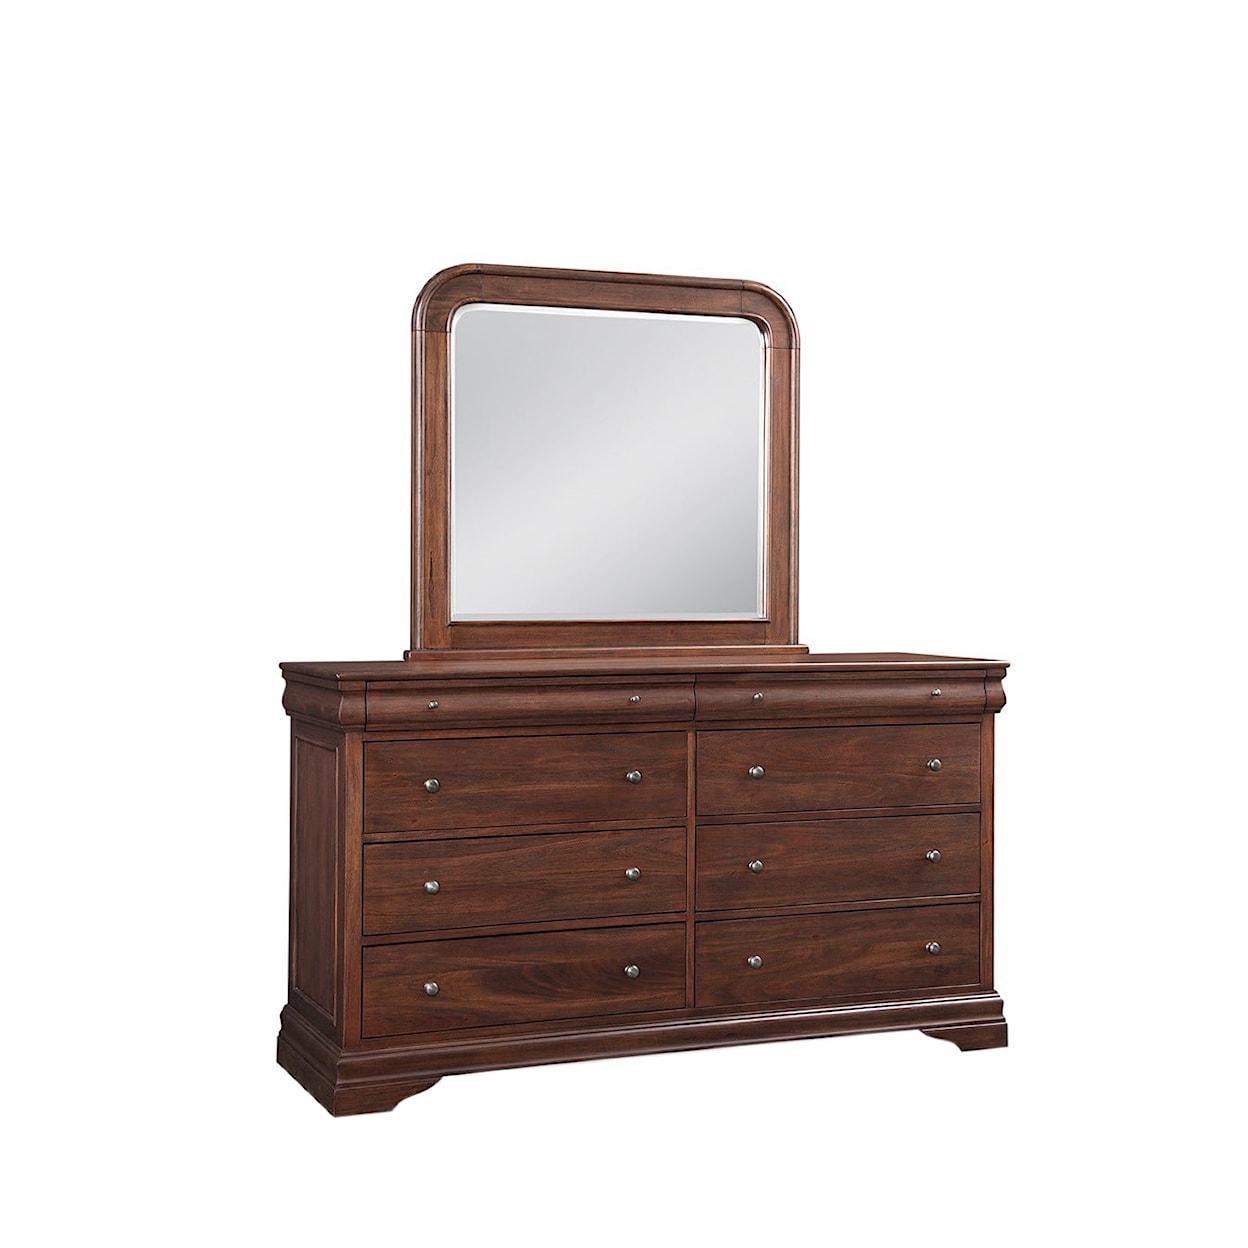 Virginia Furniture Market Solid Wood Montpelier King Bedroom Group